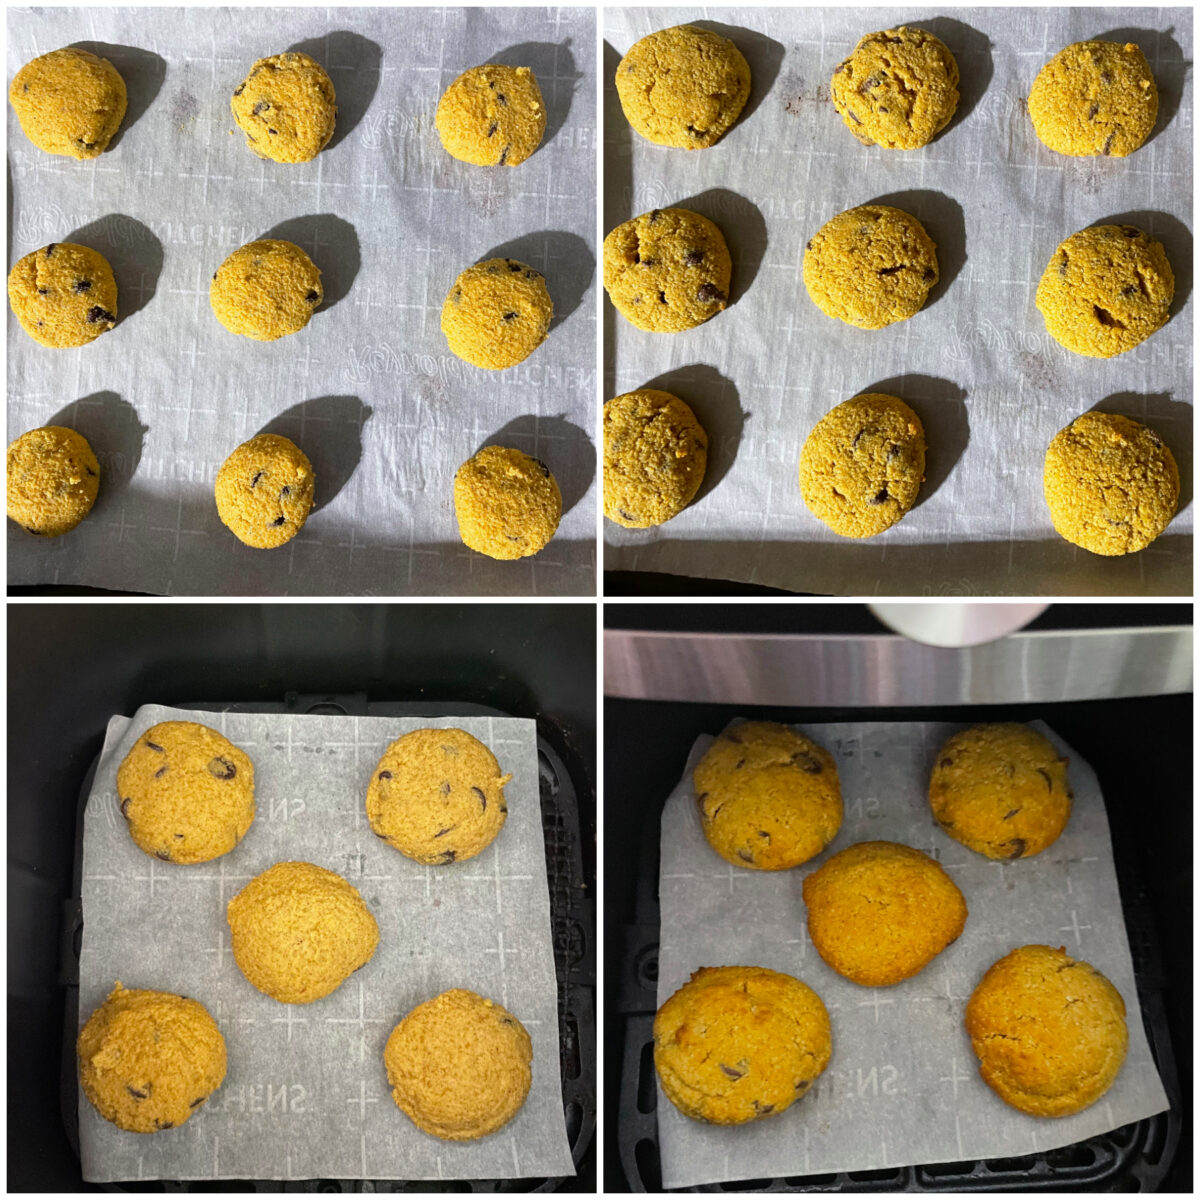 Top 2 images baking in oven, bottom 2 in air fryer.